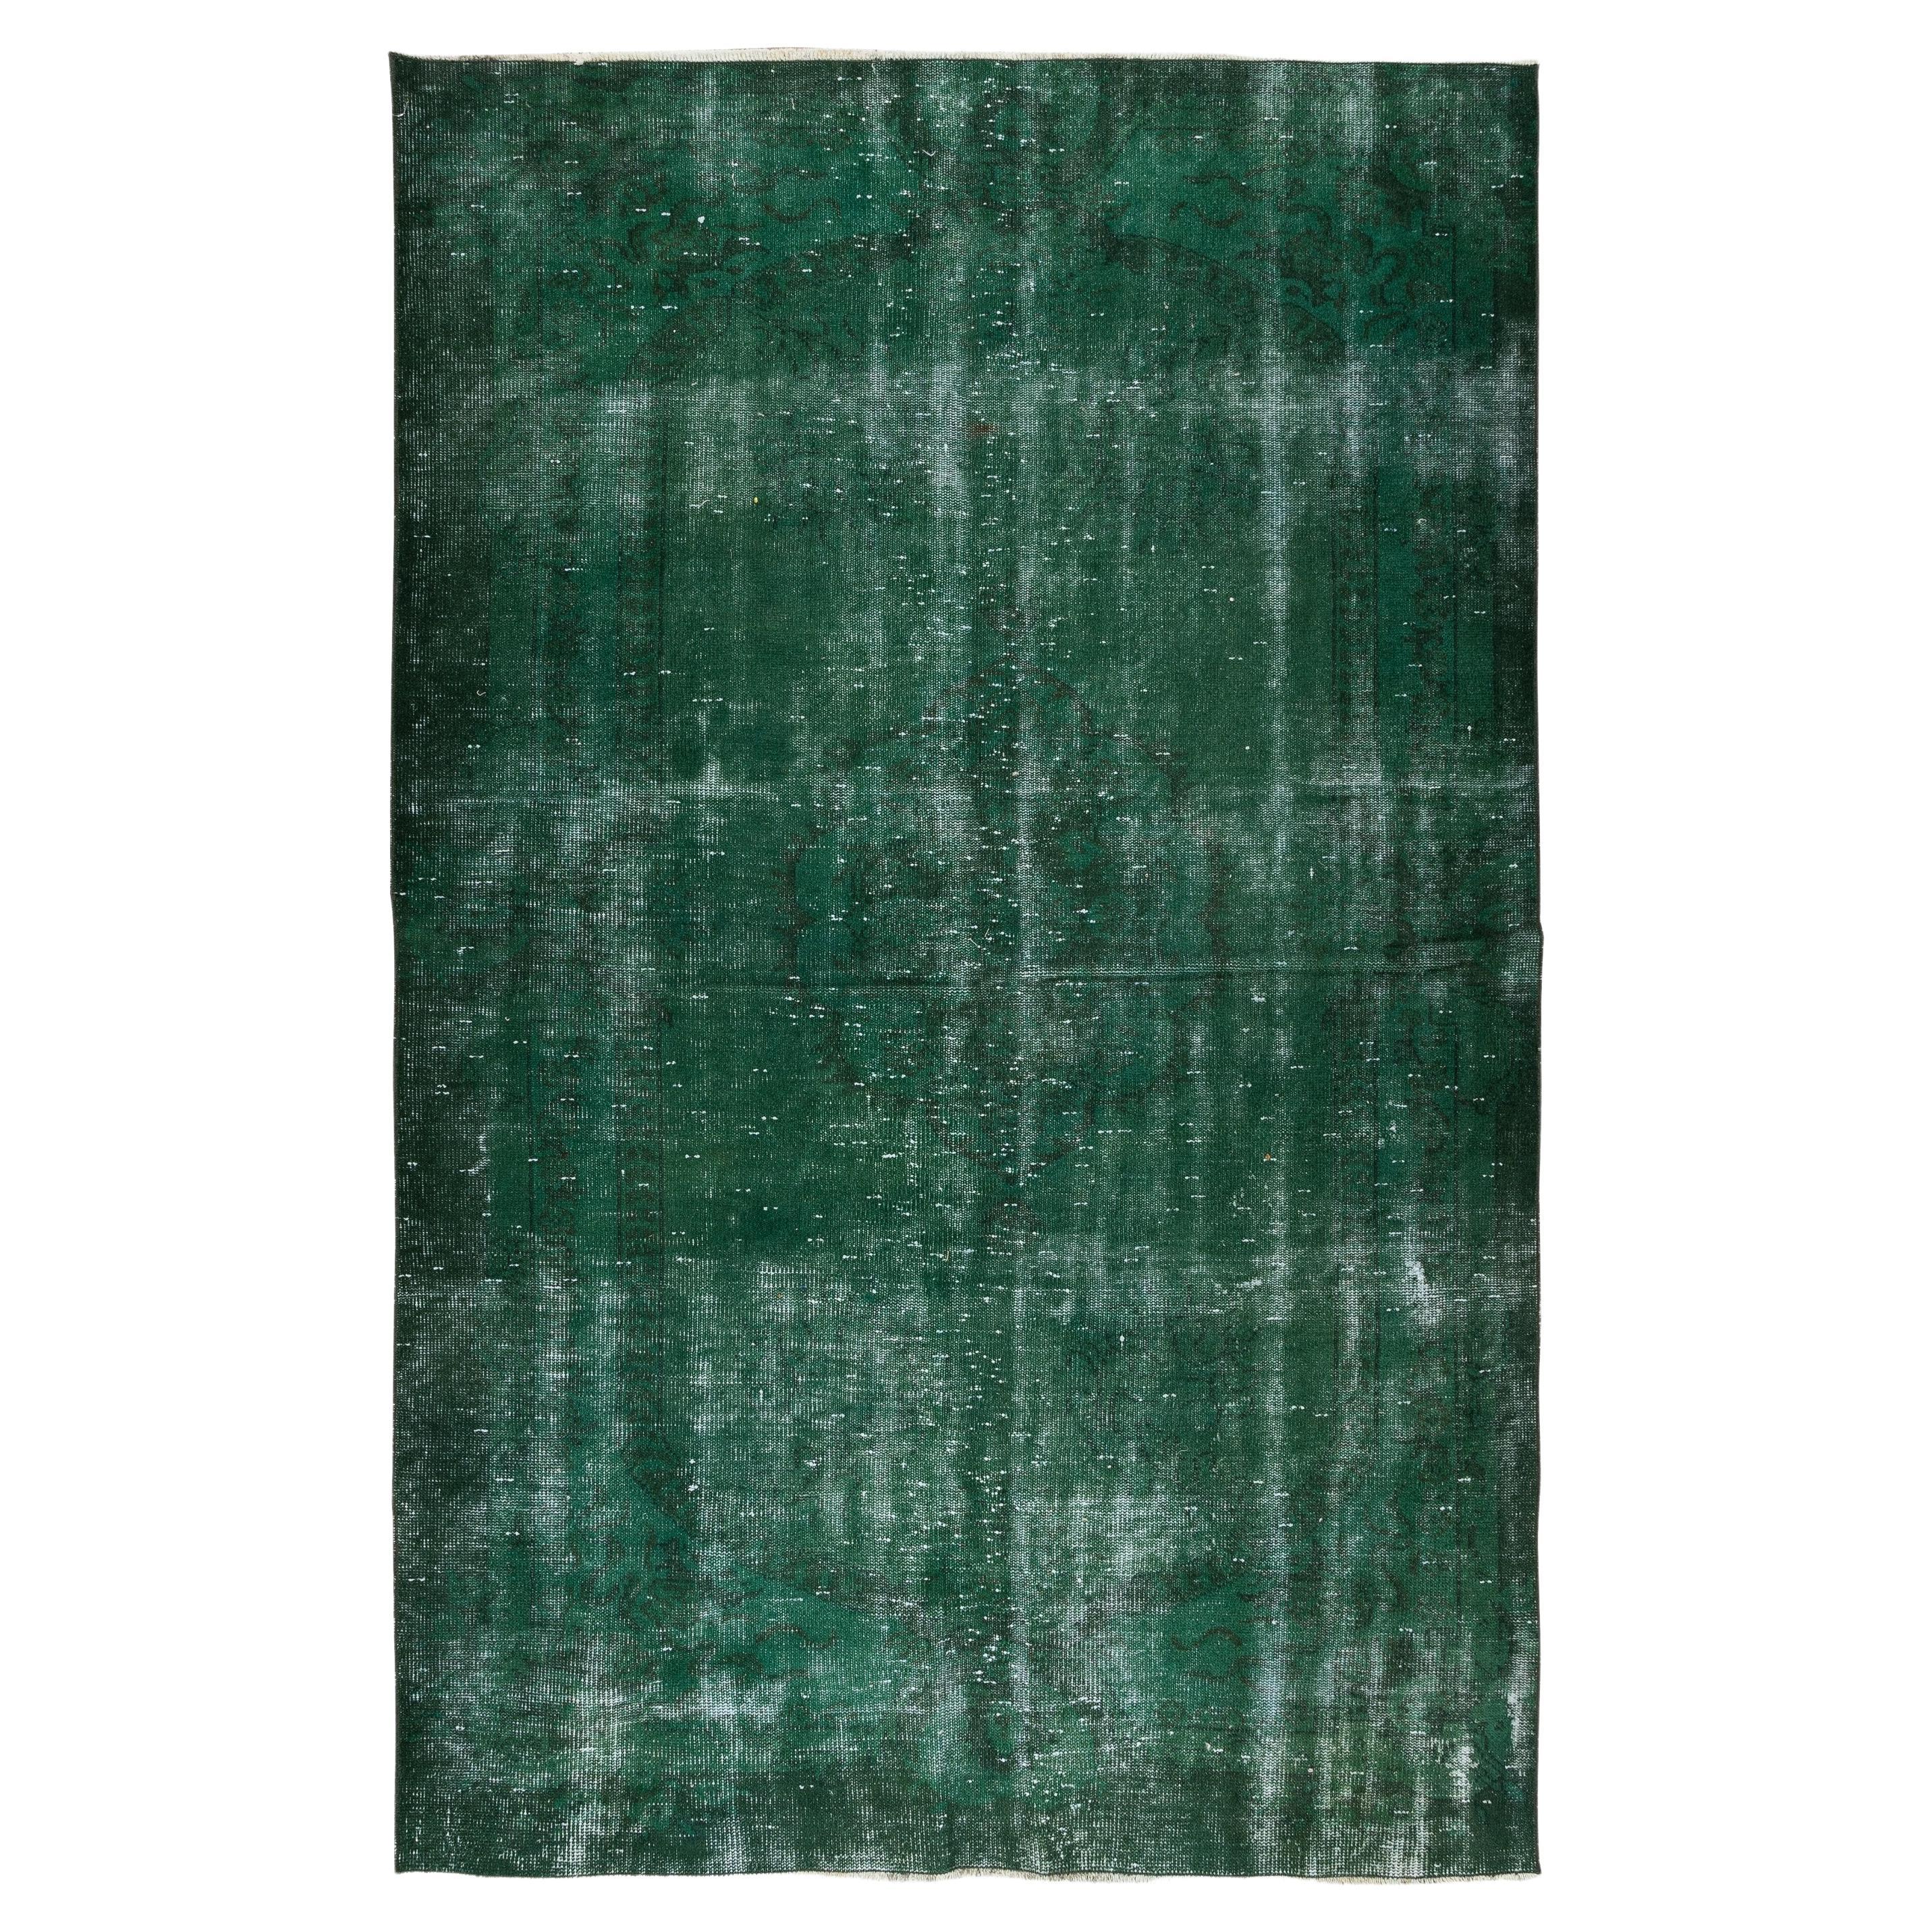 5.6x8.6 Ft Handmade Vintage Turkish Distressed Rug in Green 4 Modern Interiors en vente